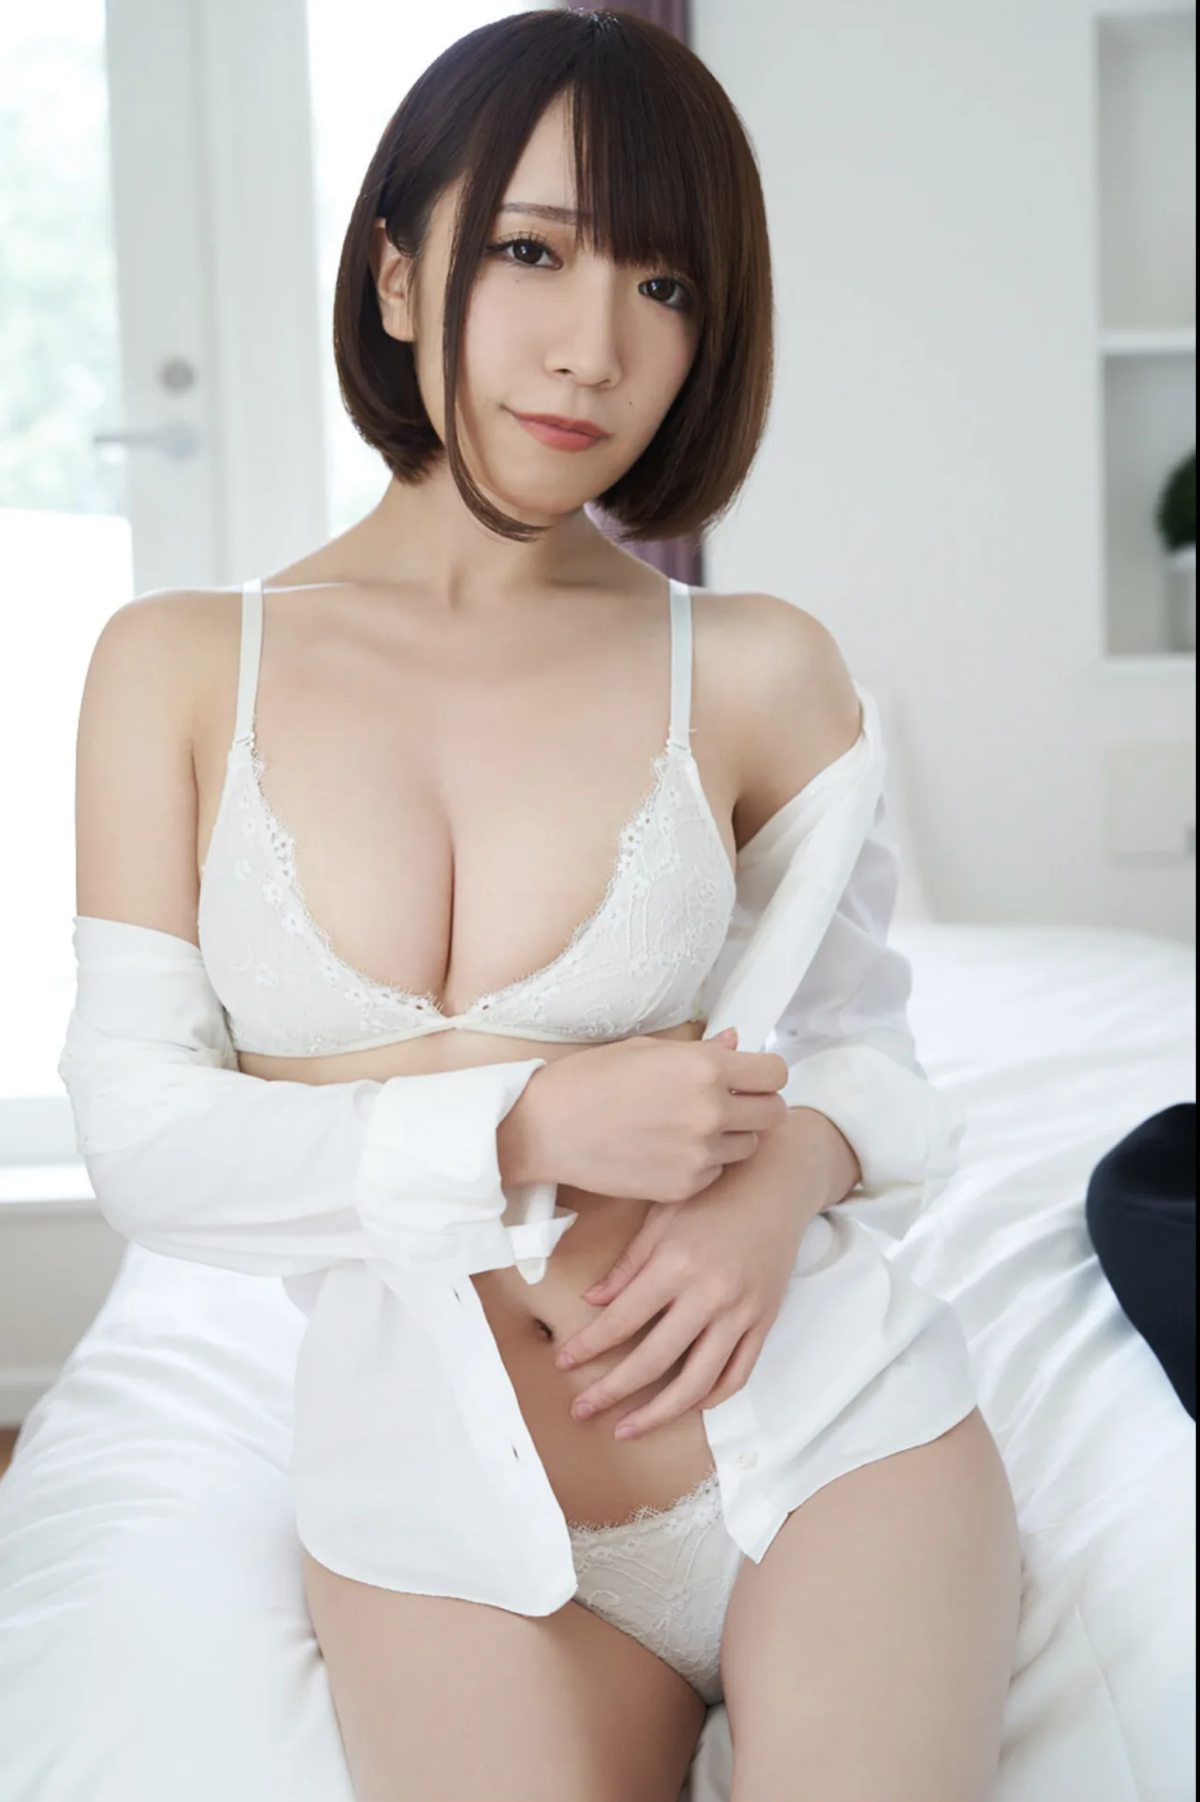 FRIDAY Digital Photobook Airi Shimizu 清水あいり Too erotic body Vol 3 エロすぎるカラダ Vol 3 2021 04 30 0020 4165099465.jpg